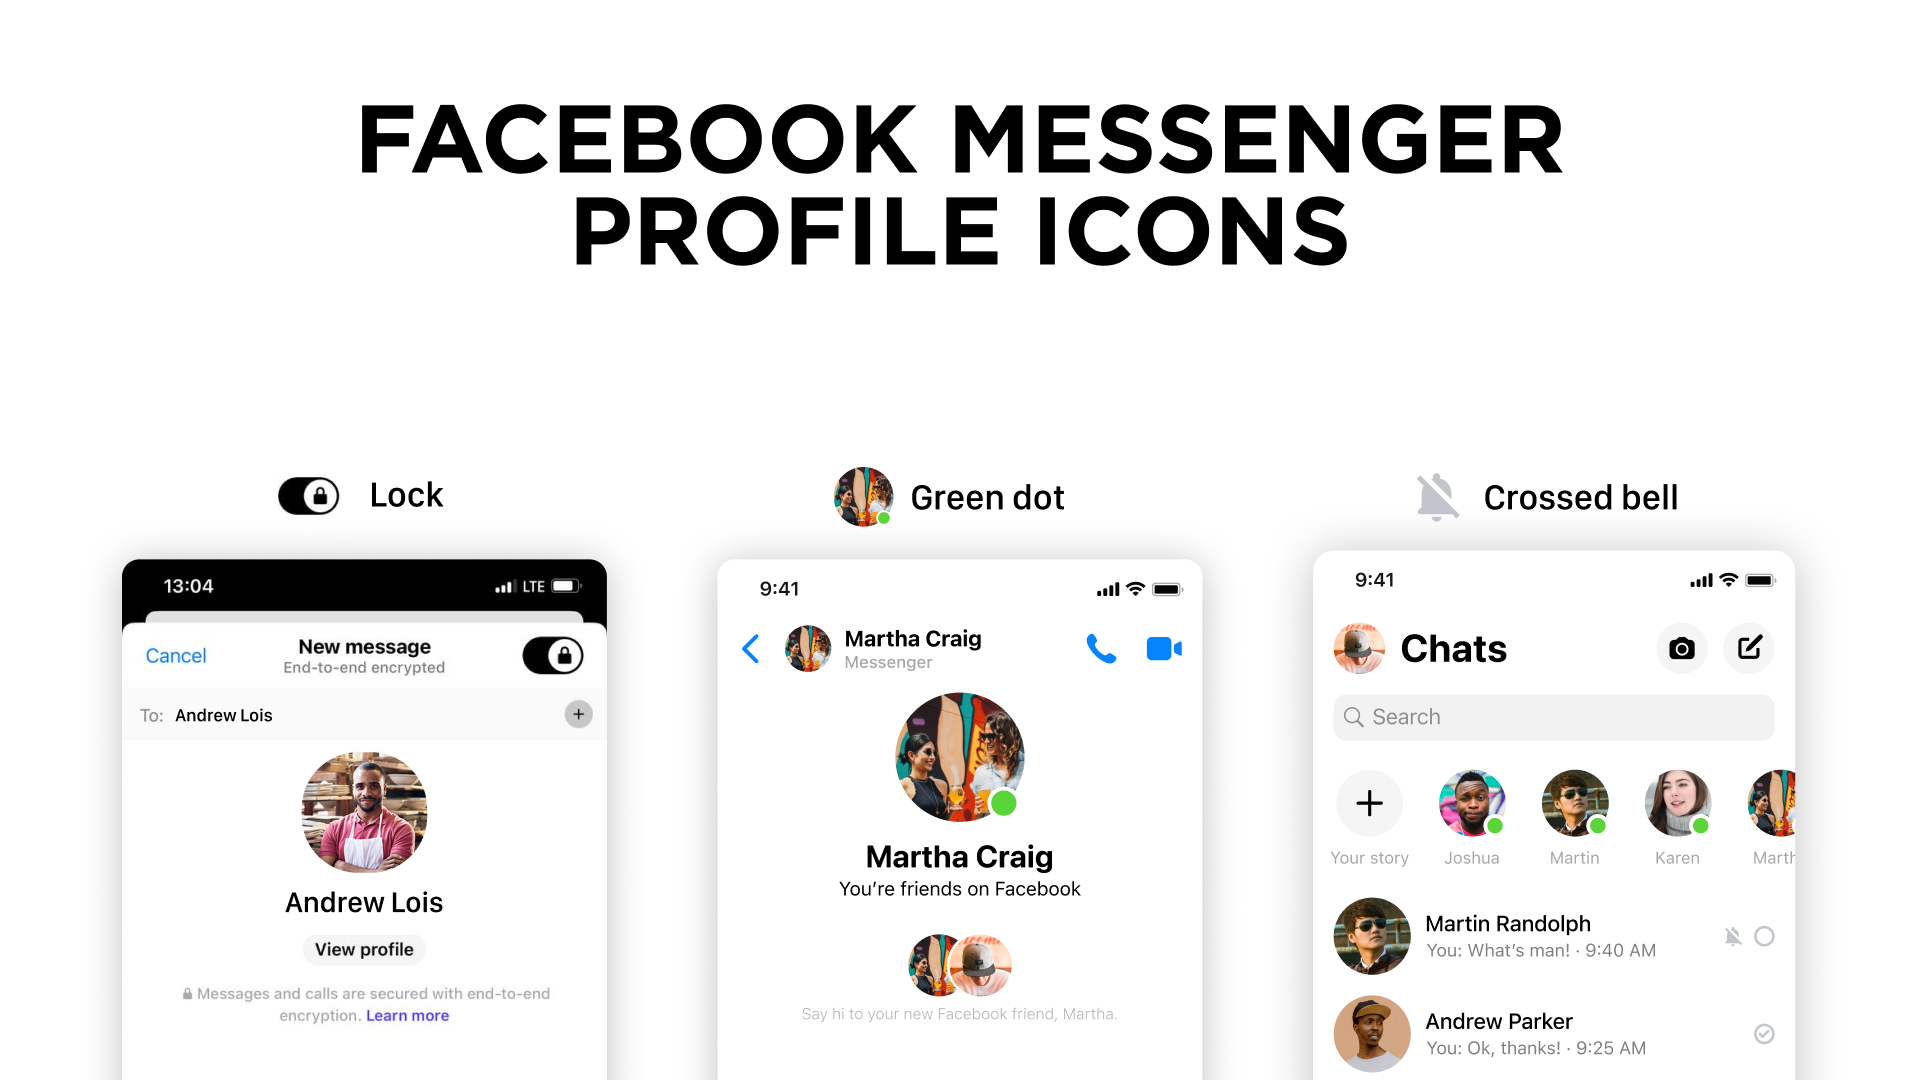 Facebook Messenger profile icons